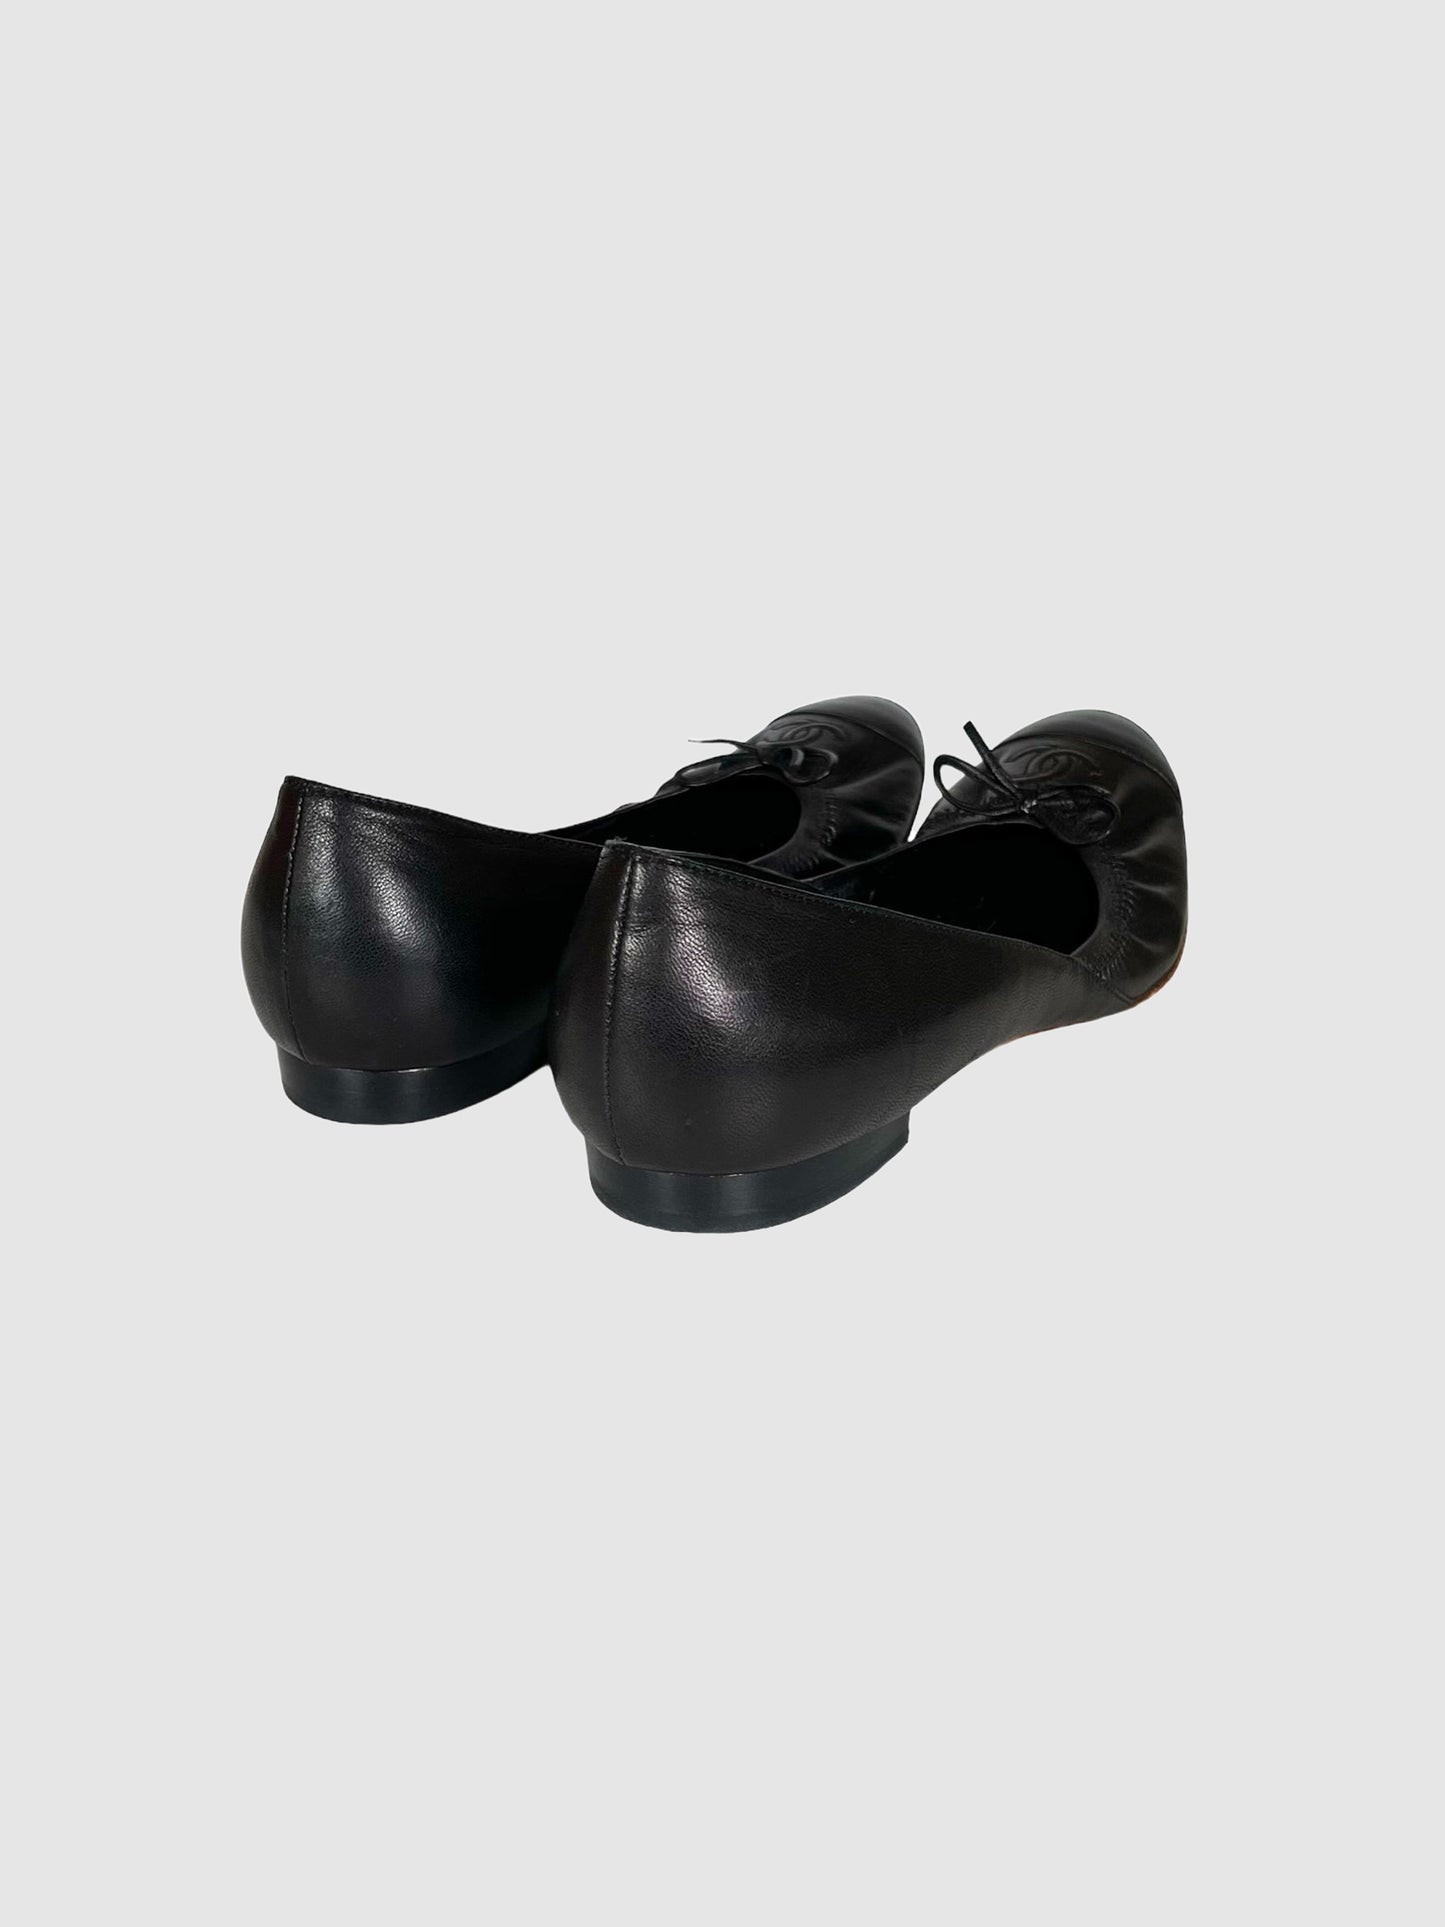 Chanel Scrunchie Ballerina Flats - Size 7.5